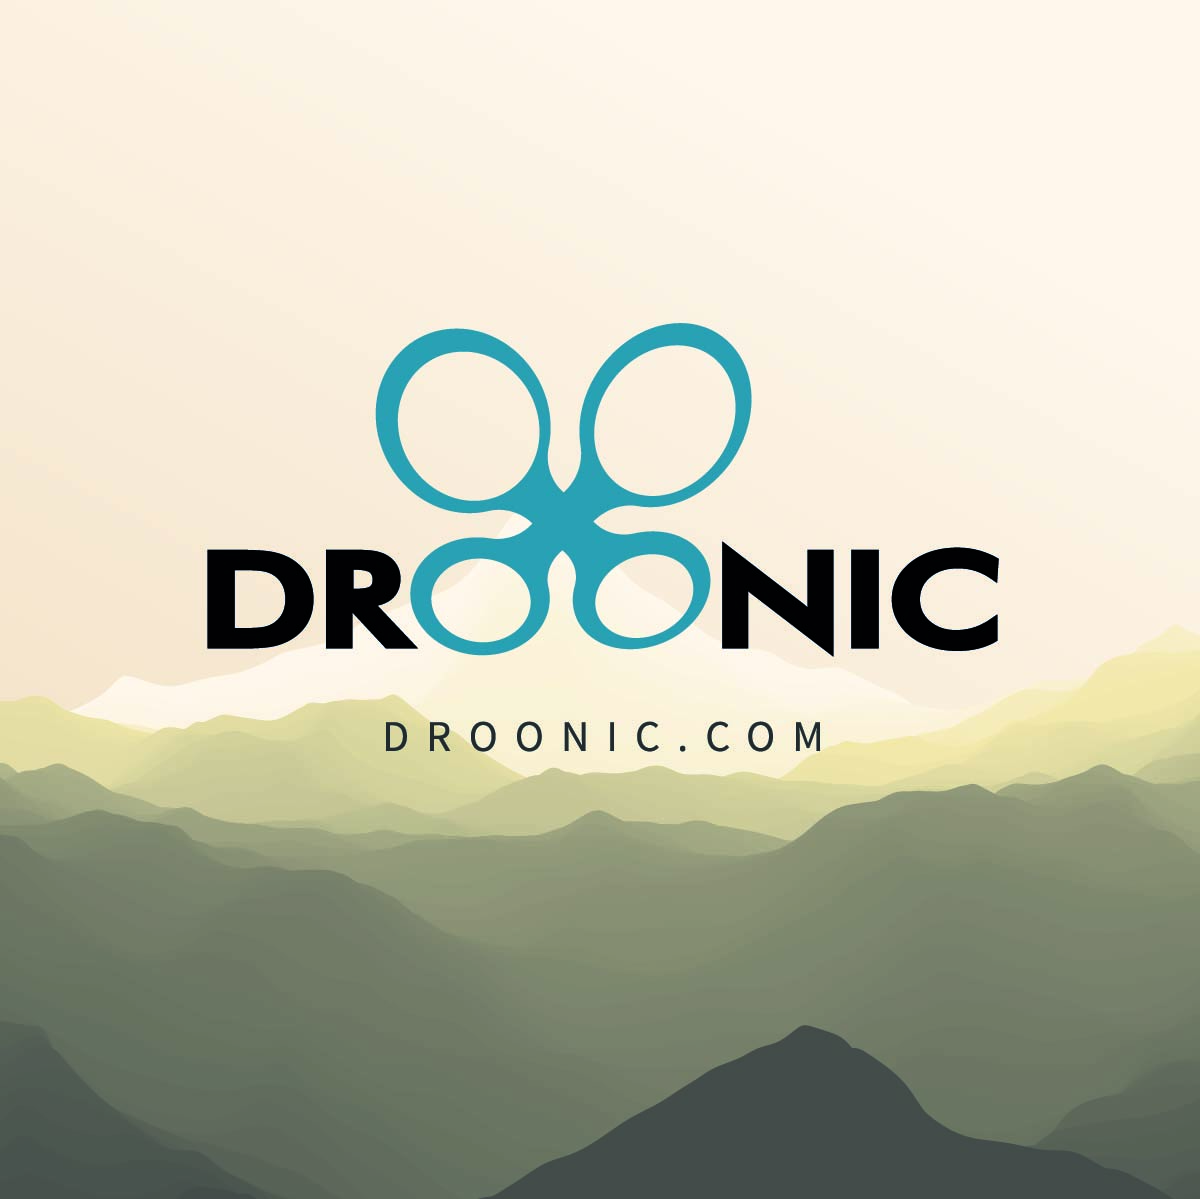 DROONIC - Drone Branding for sale - by Brandizle